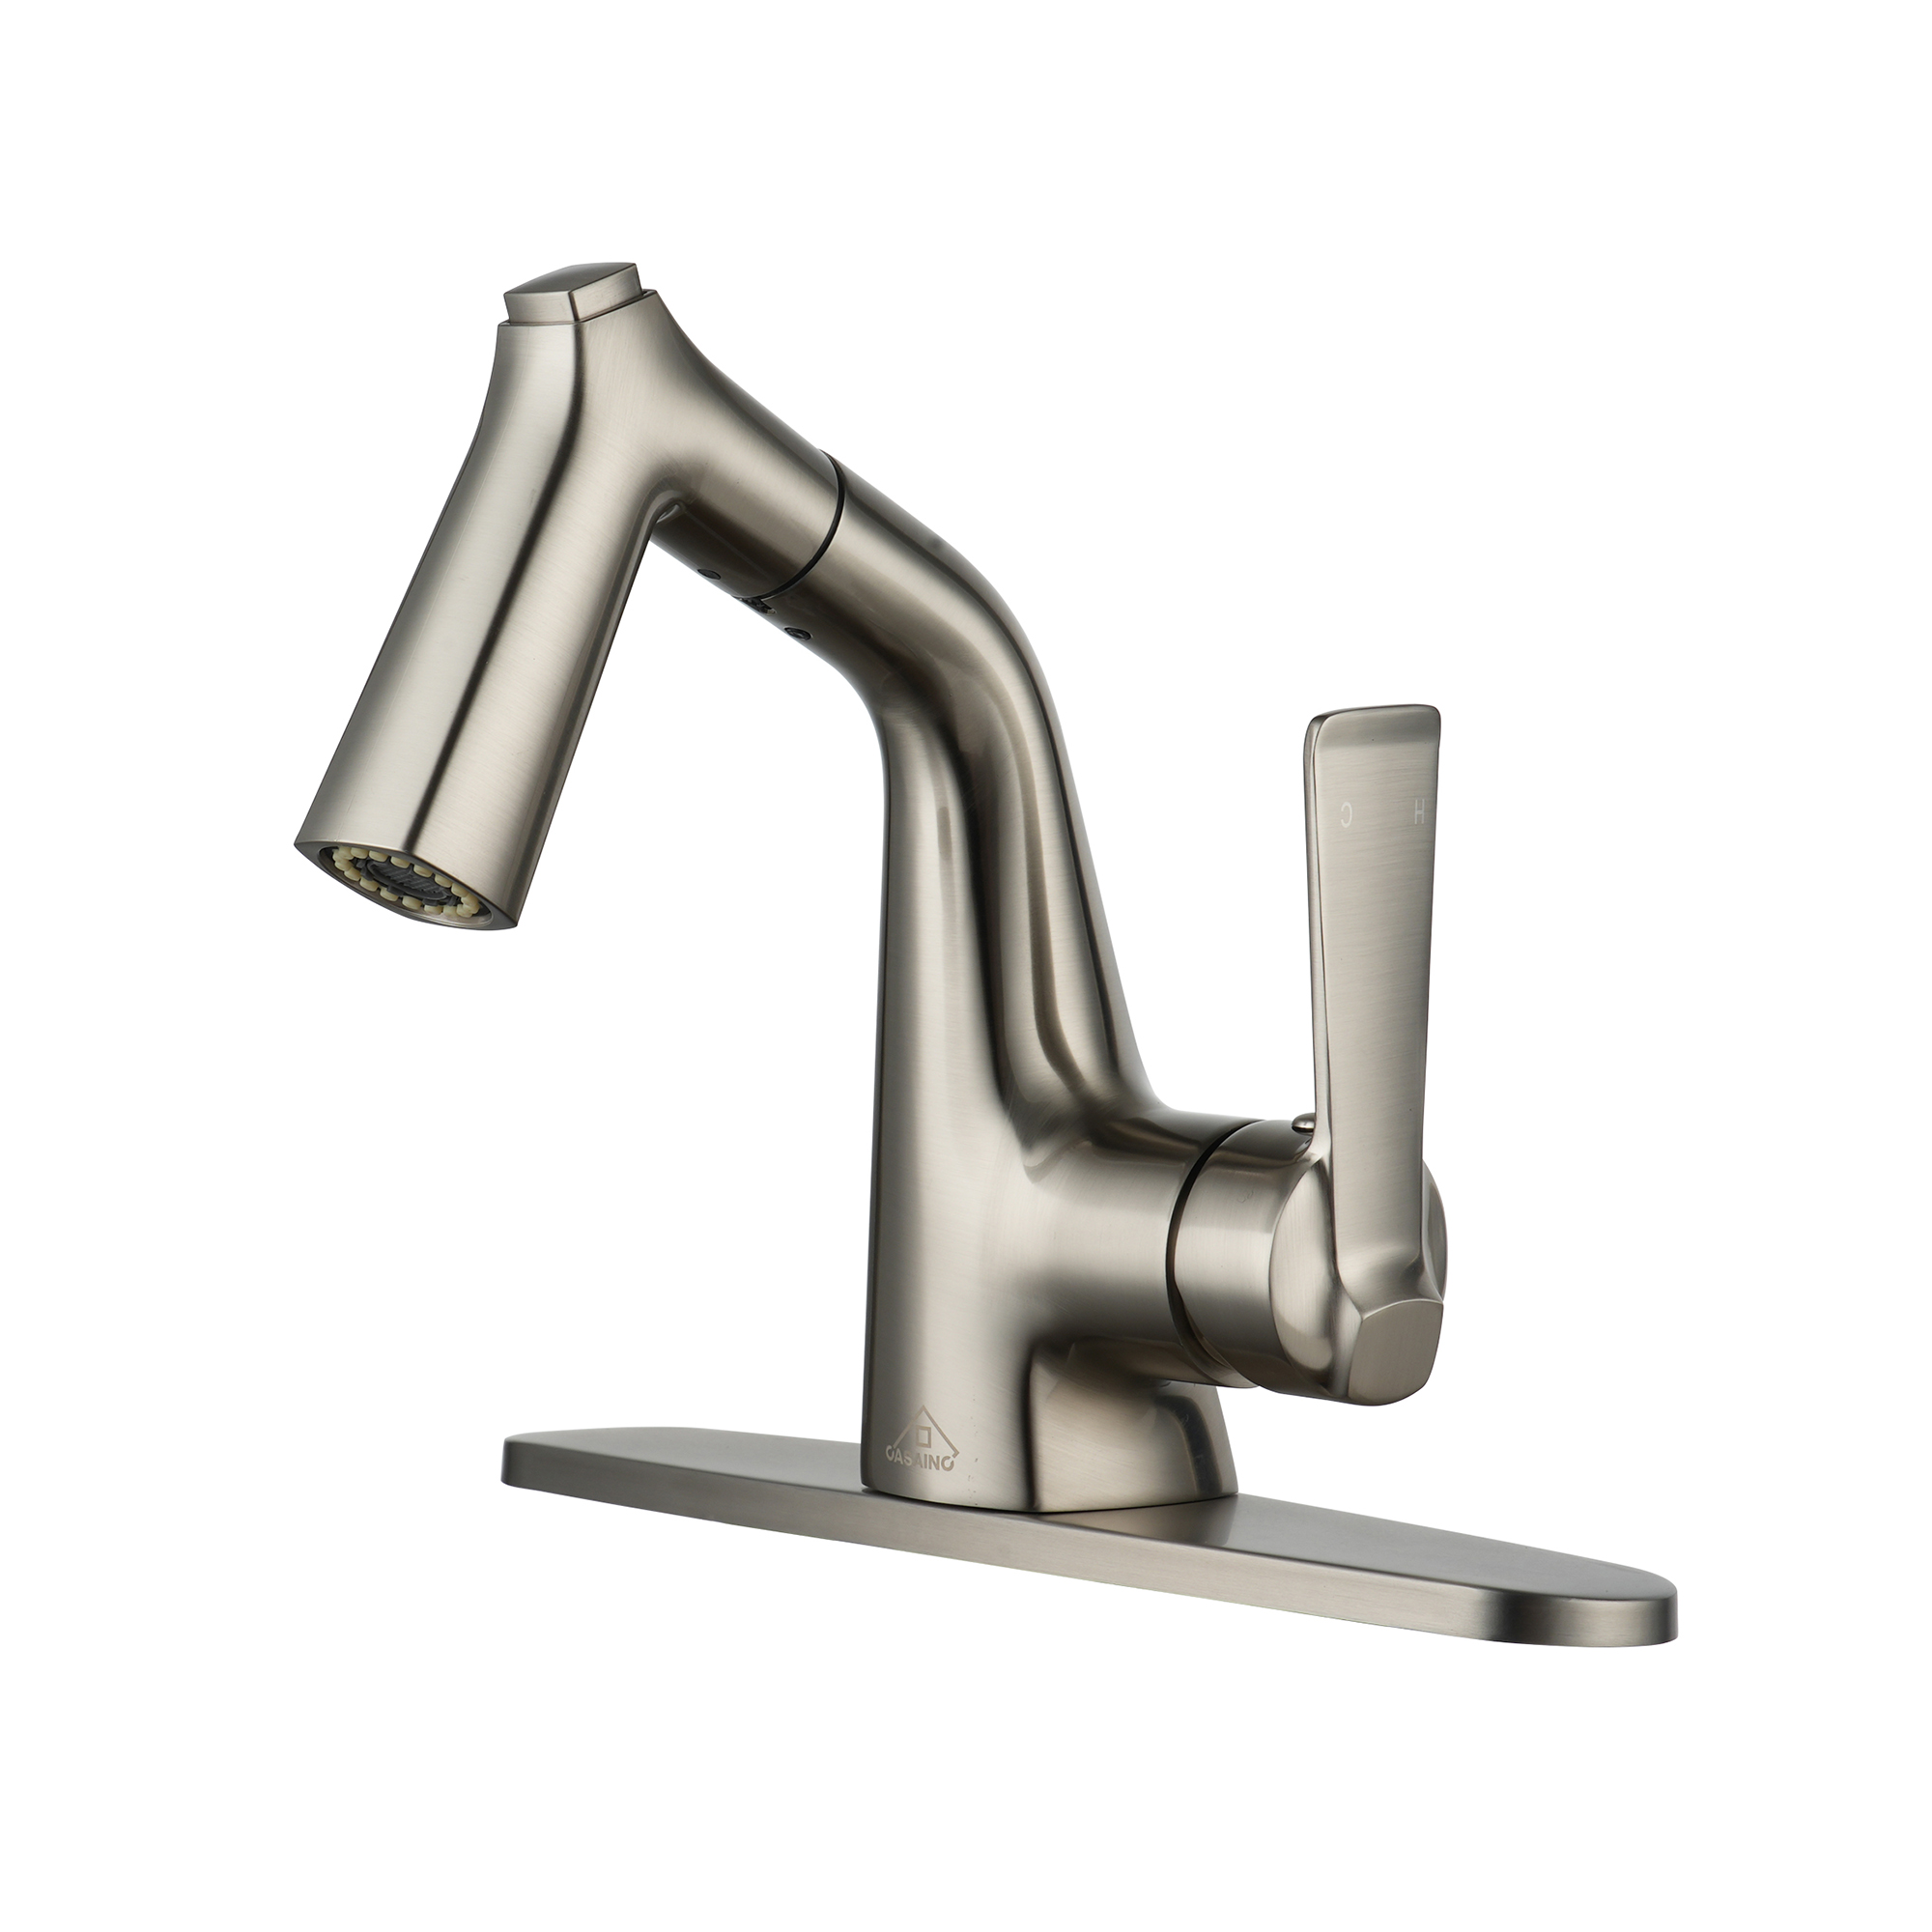 CASAINC Single-Handle Pull-Out Sprayer Basin Faucet single hole faucets 